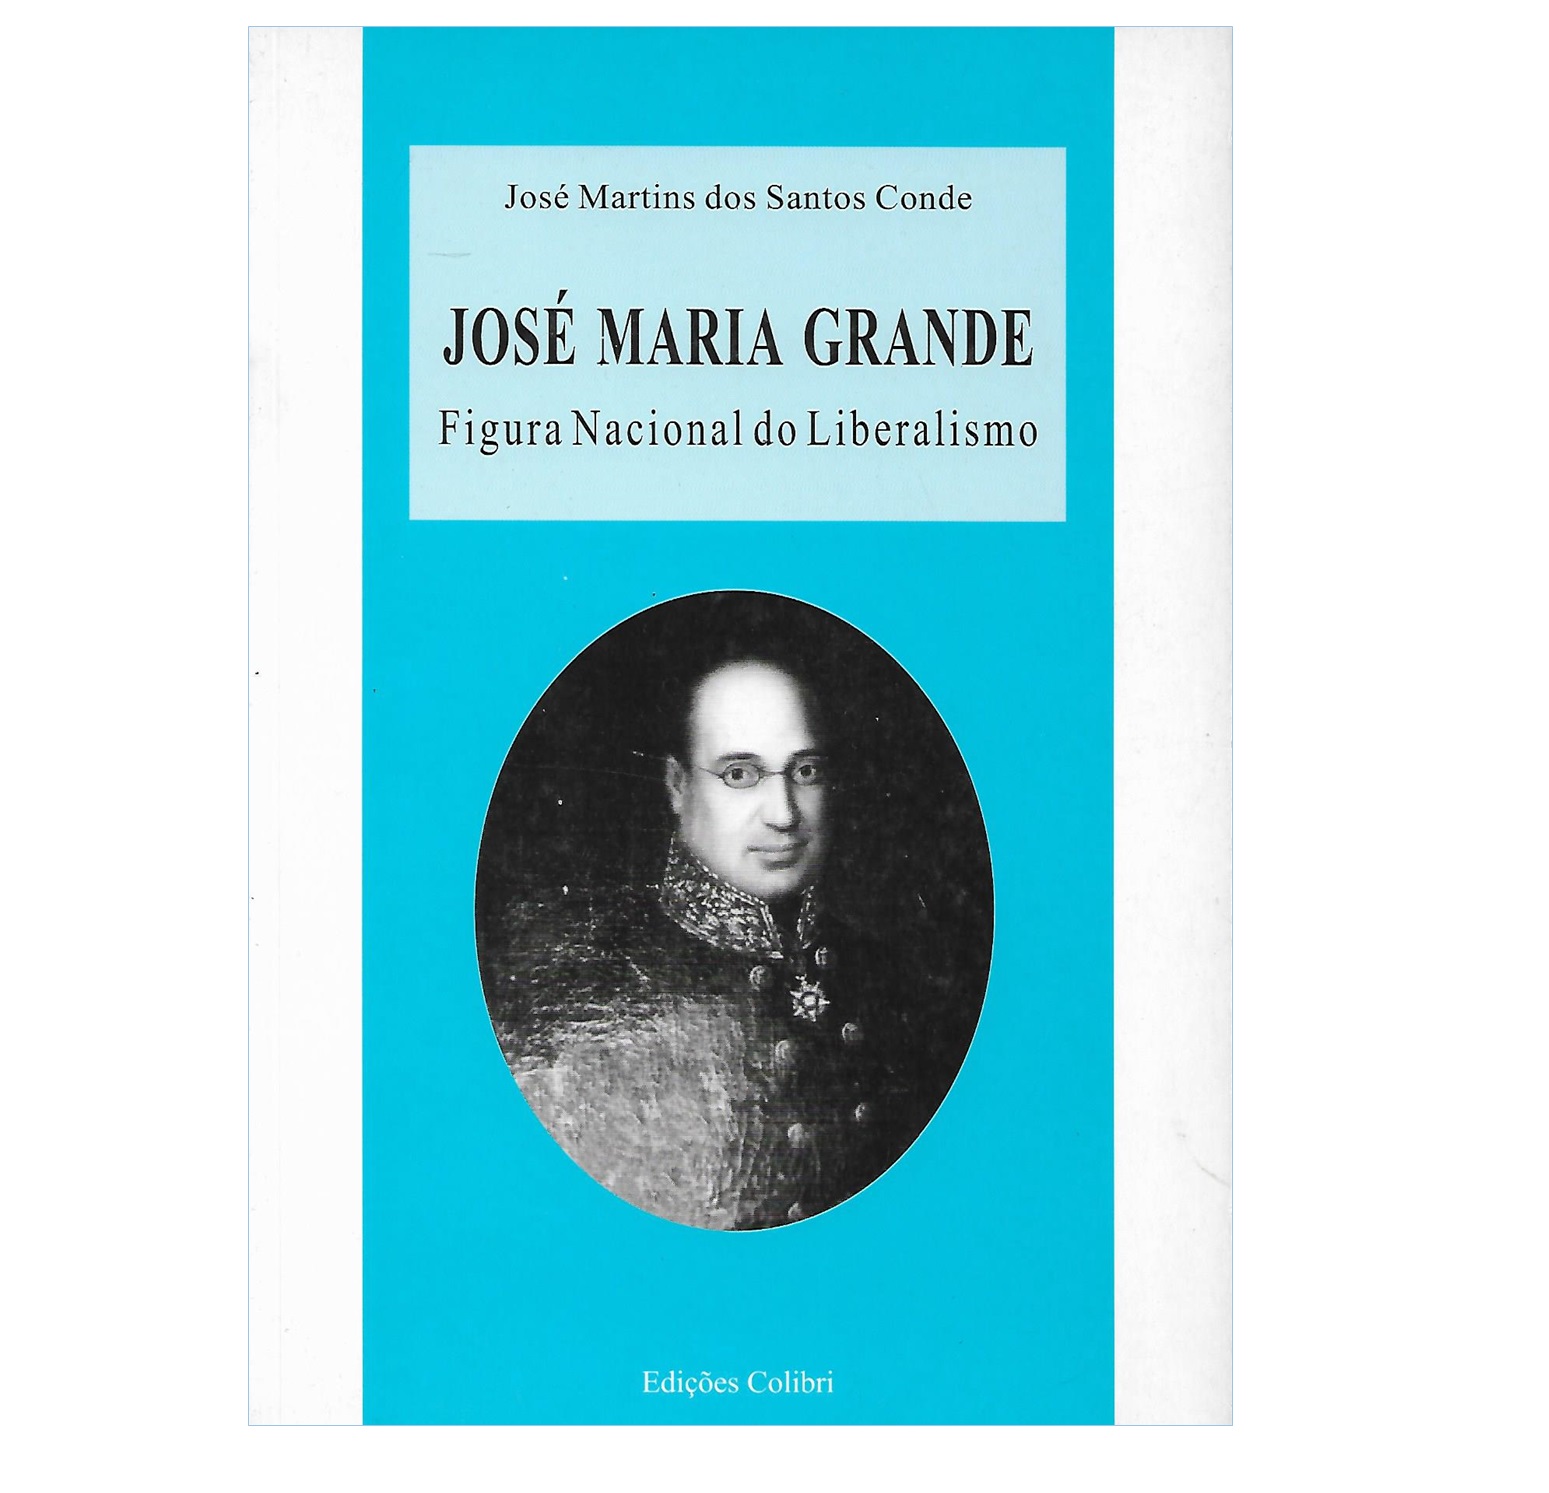 JOSÉ MARIA GRANDE: FIGURA NACIONAL DO LIBERALISMO